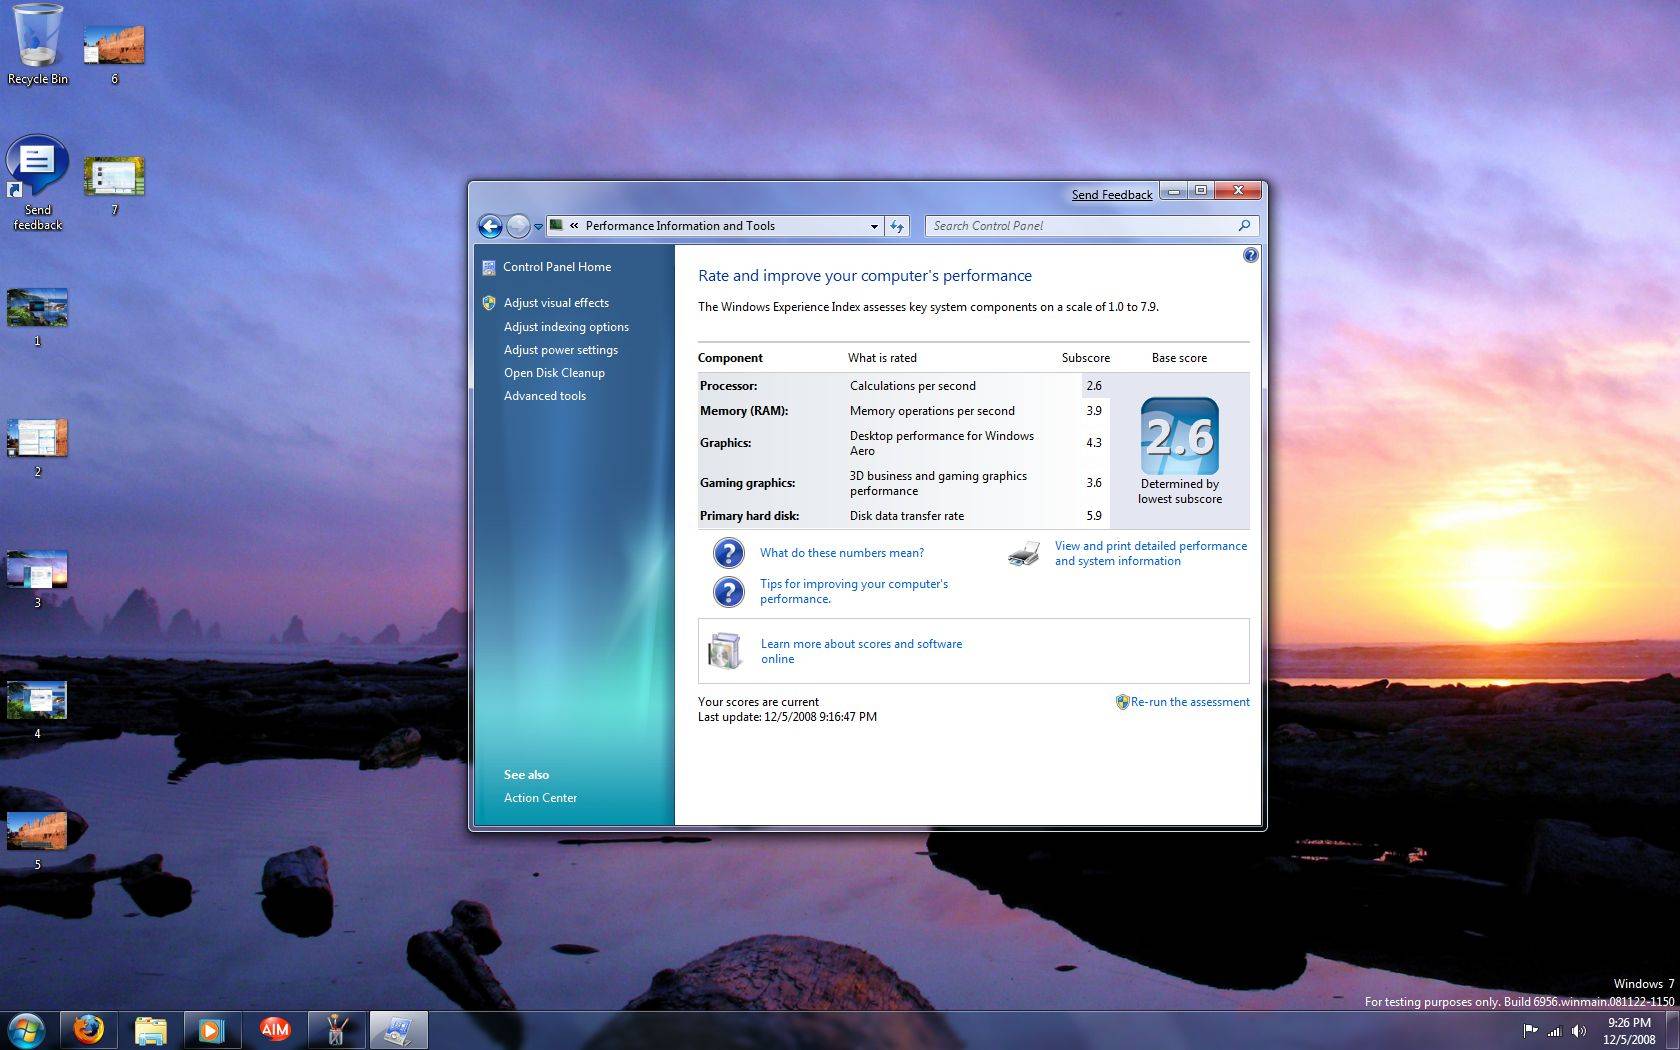 Windows 7 image download